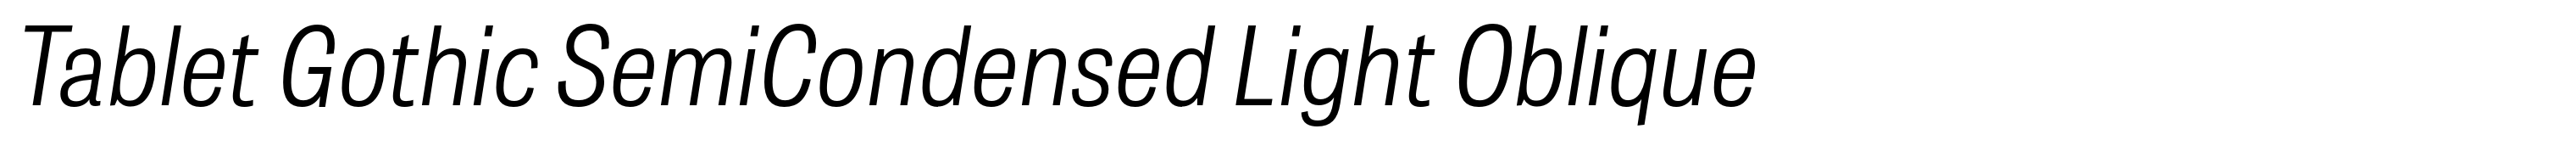 Tablet Gothic SemiCondensed Light Oblique